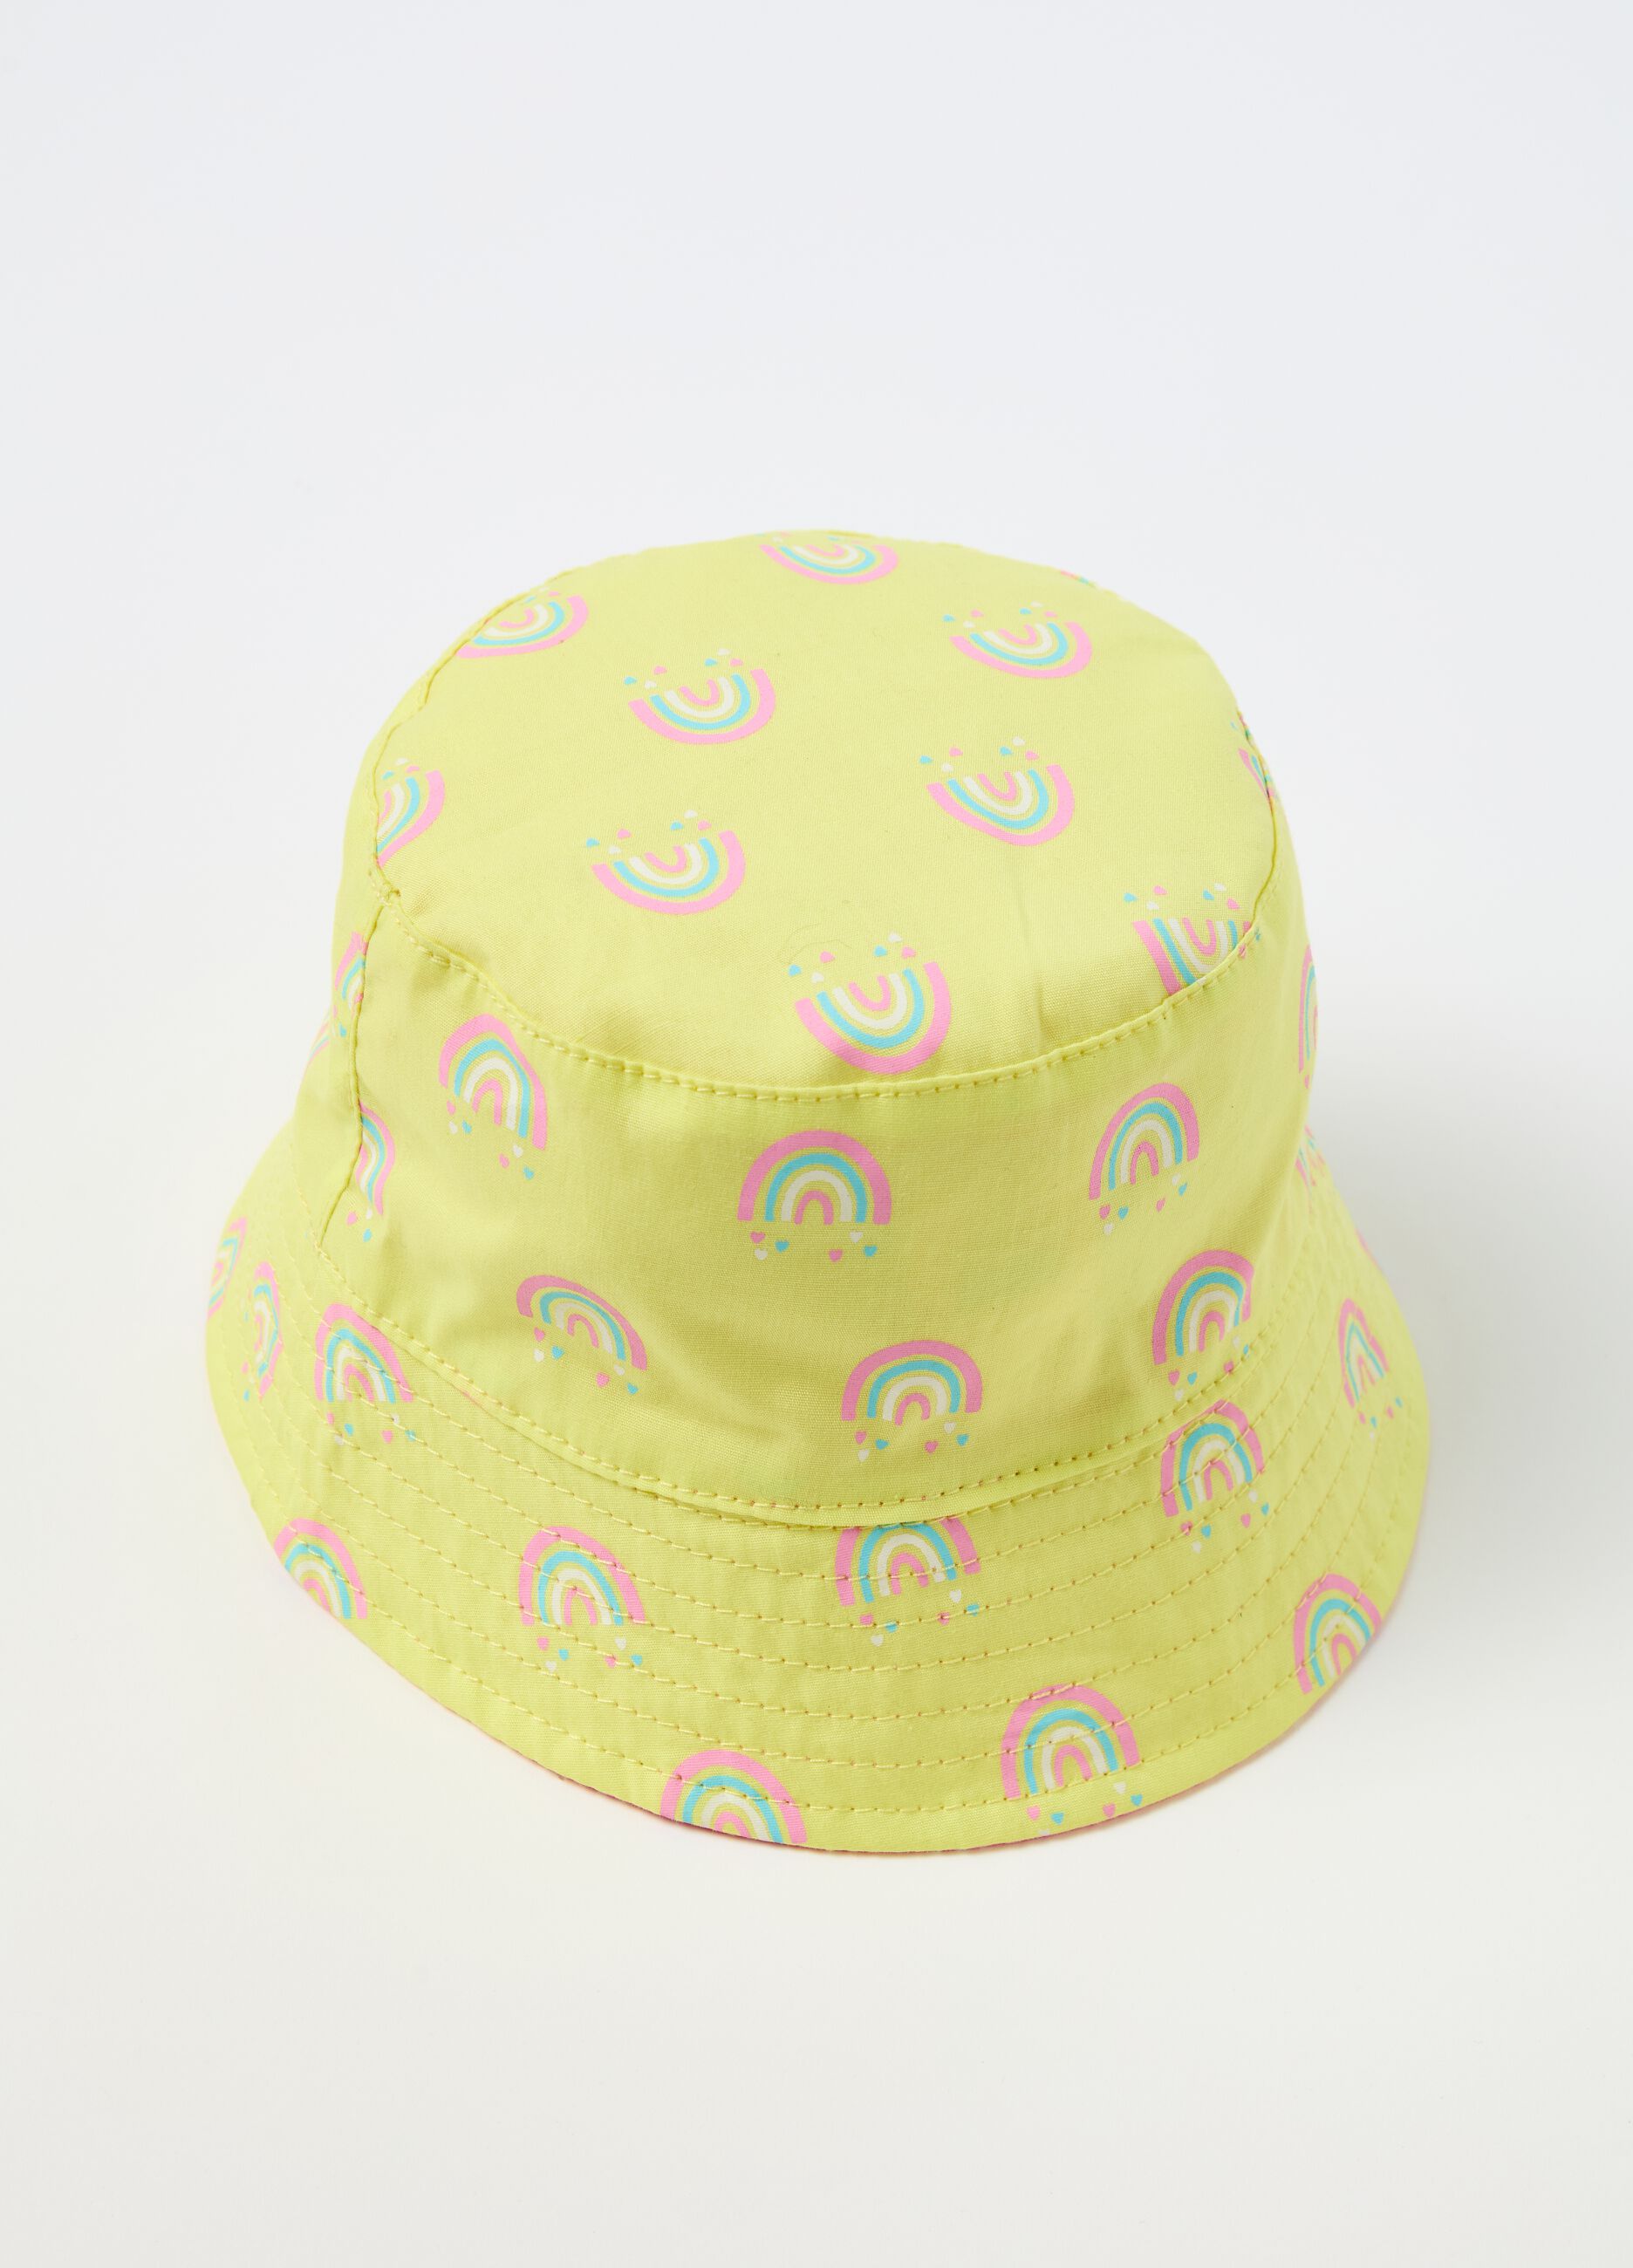 Fishing hat with rainbows print